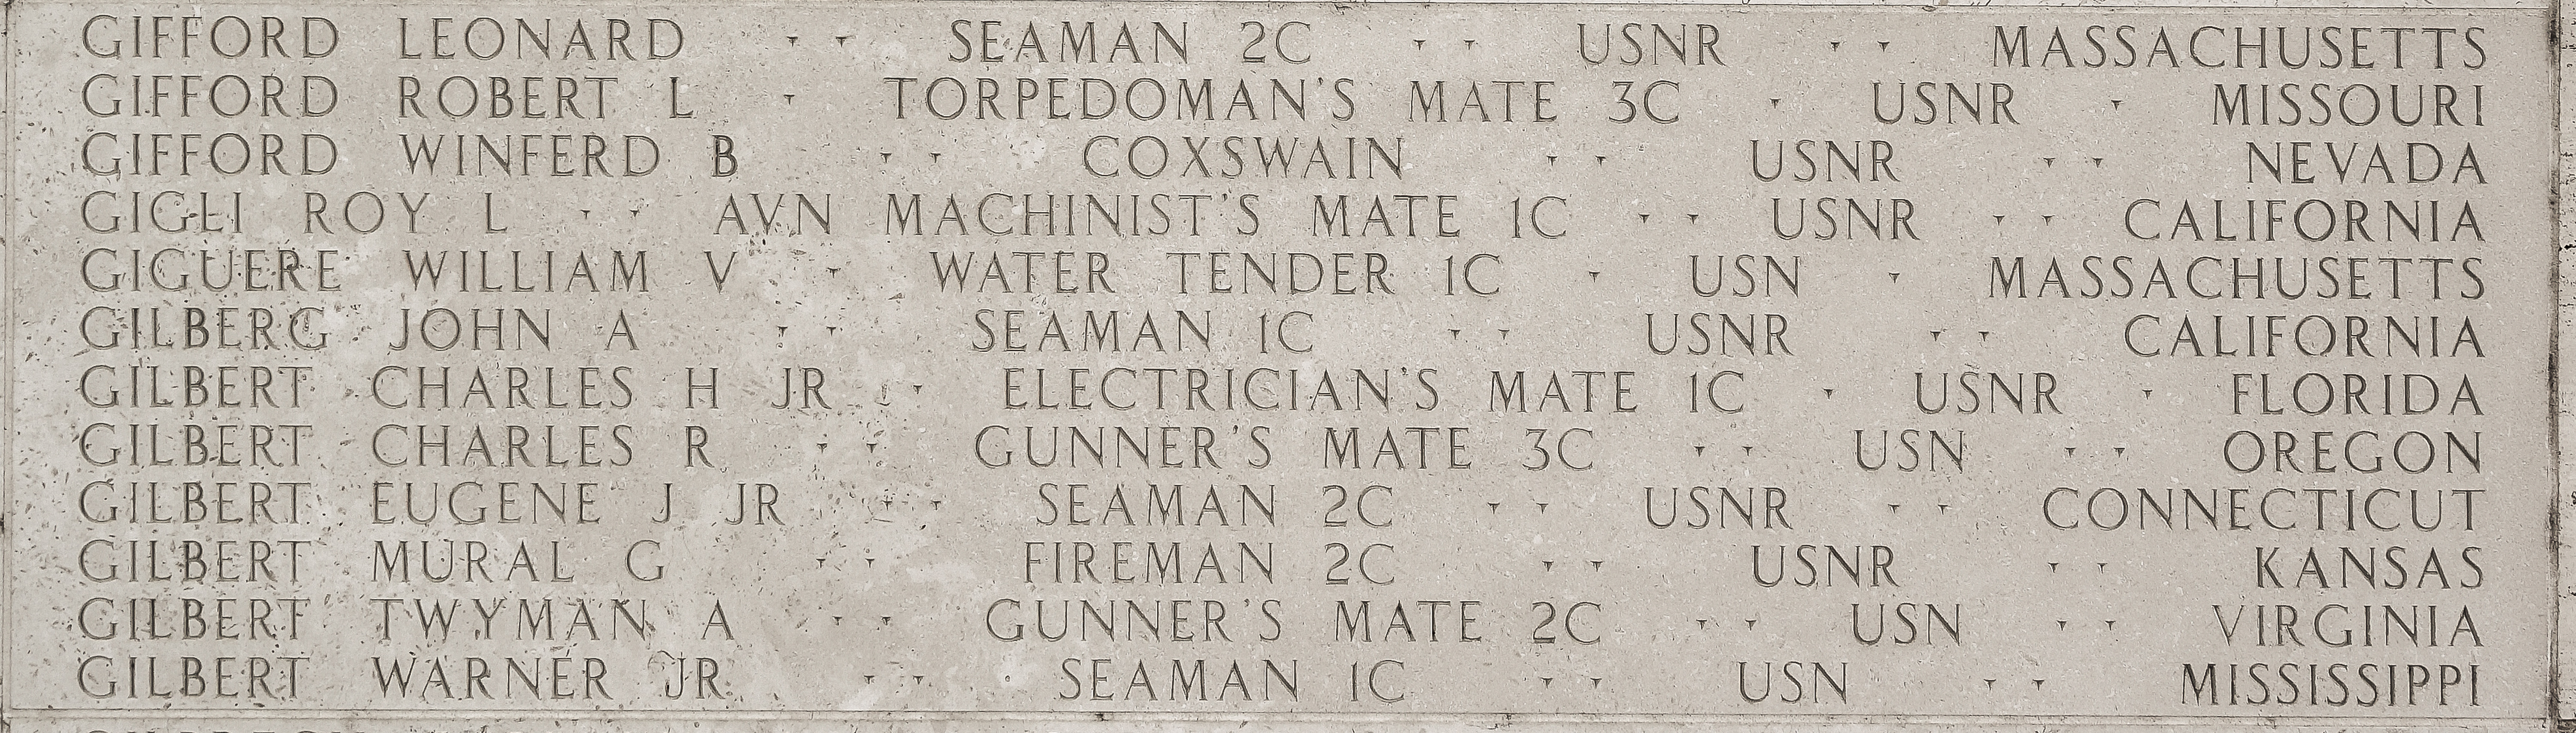 Leonard  Gifford, Seaman Second Class